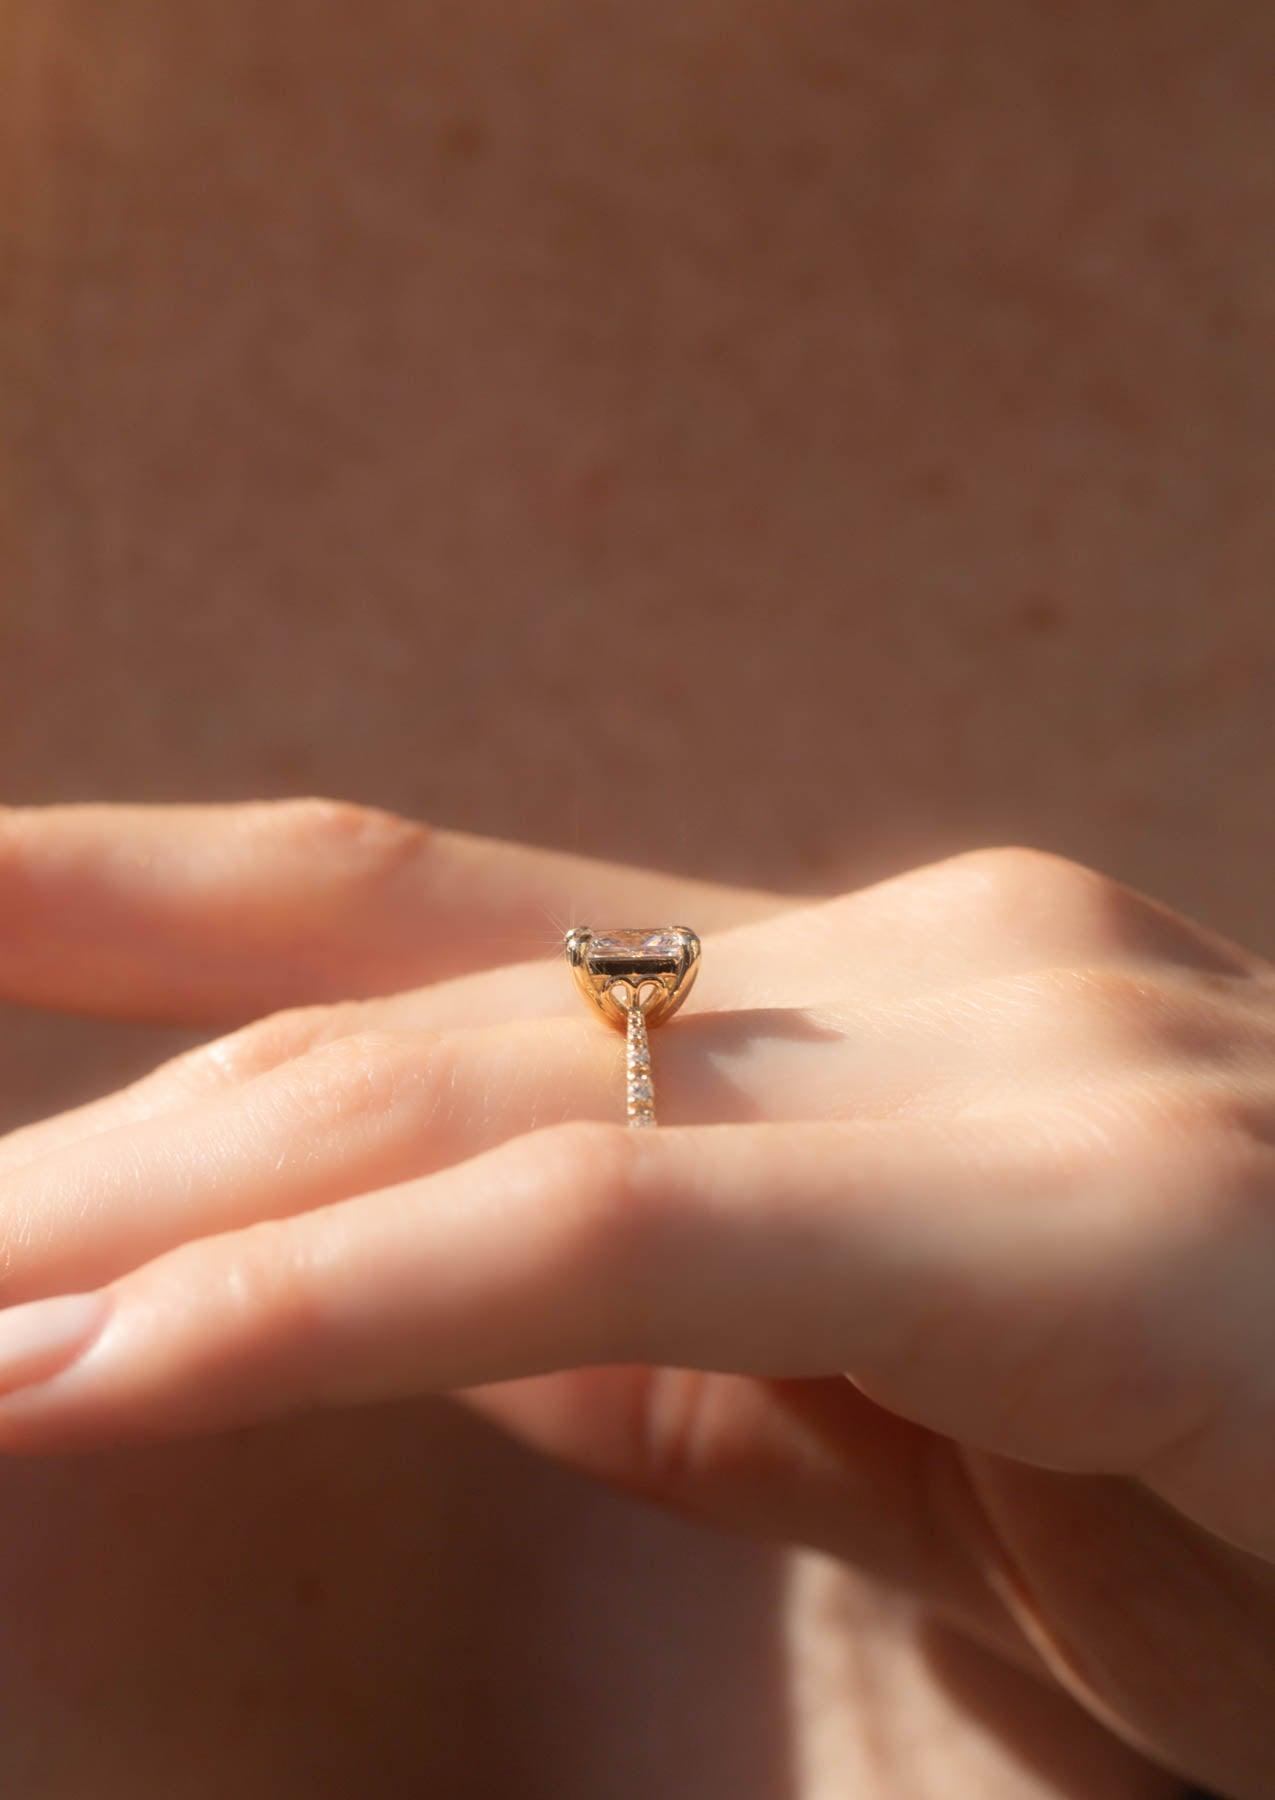 The Celine Rose Gold Cultured Diamond Ring